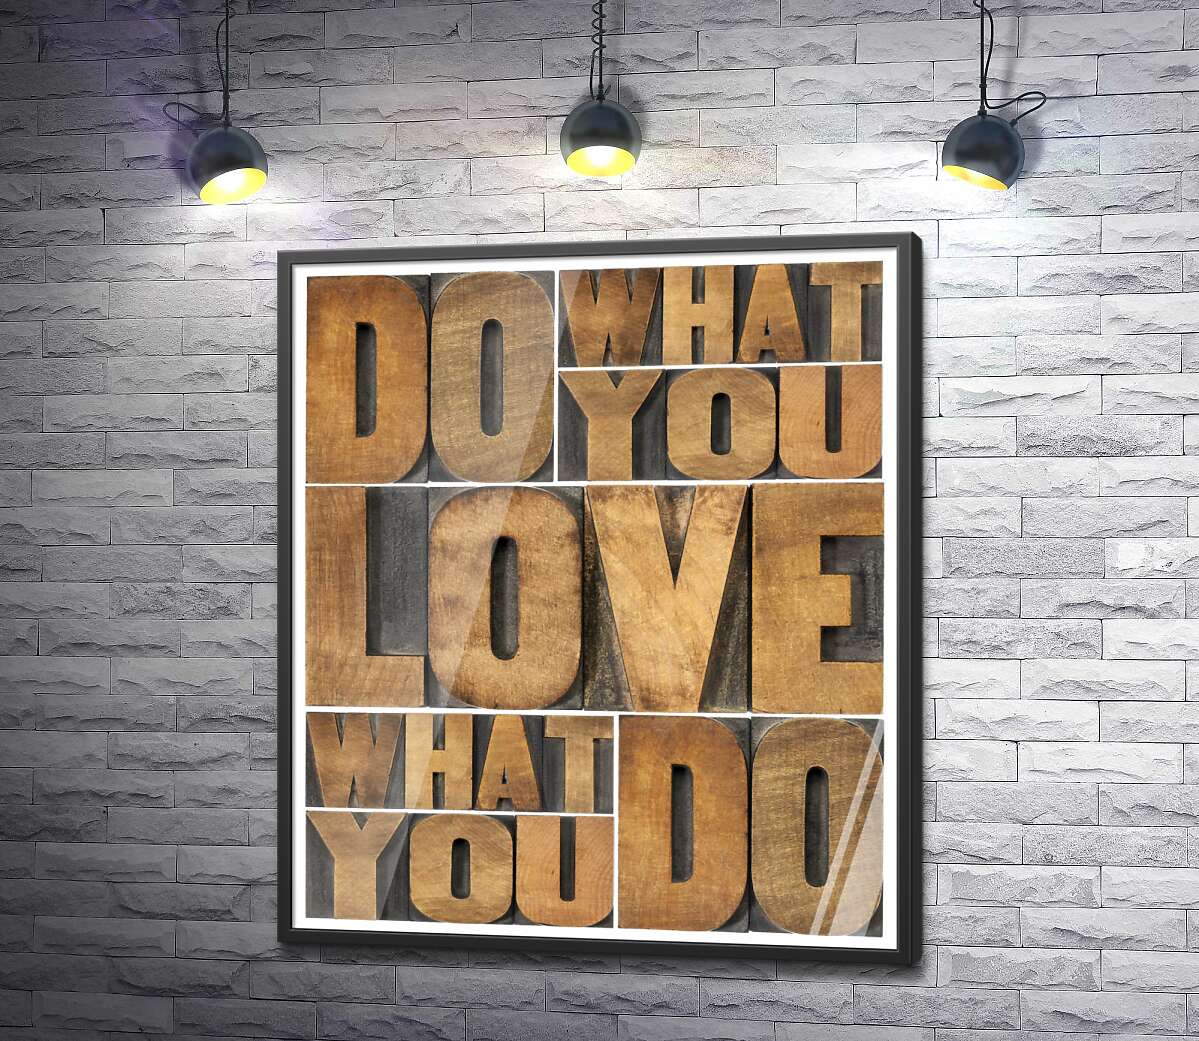 постер Мотивационная фраза "do what you love, love what you do" из деревянных букв